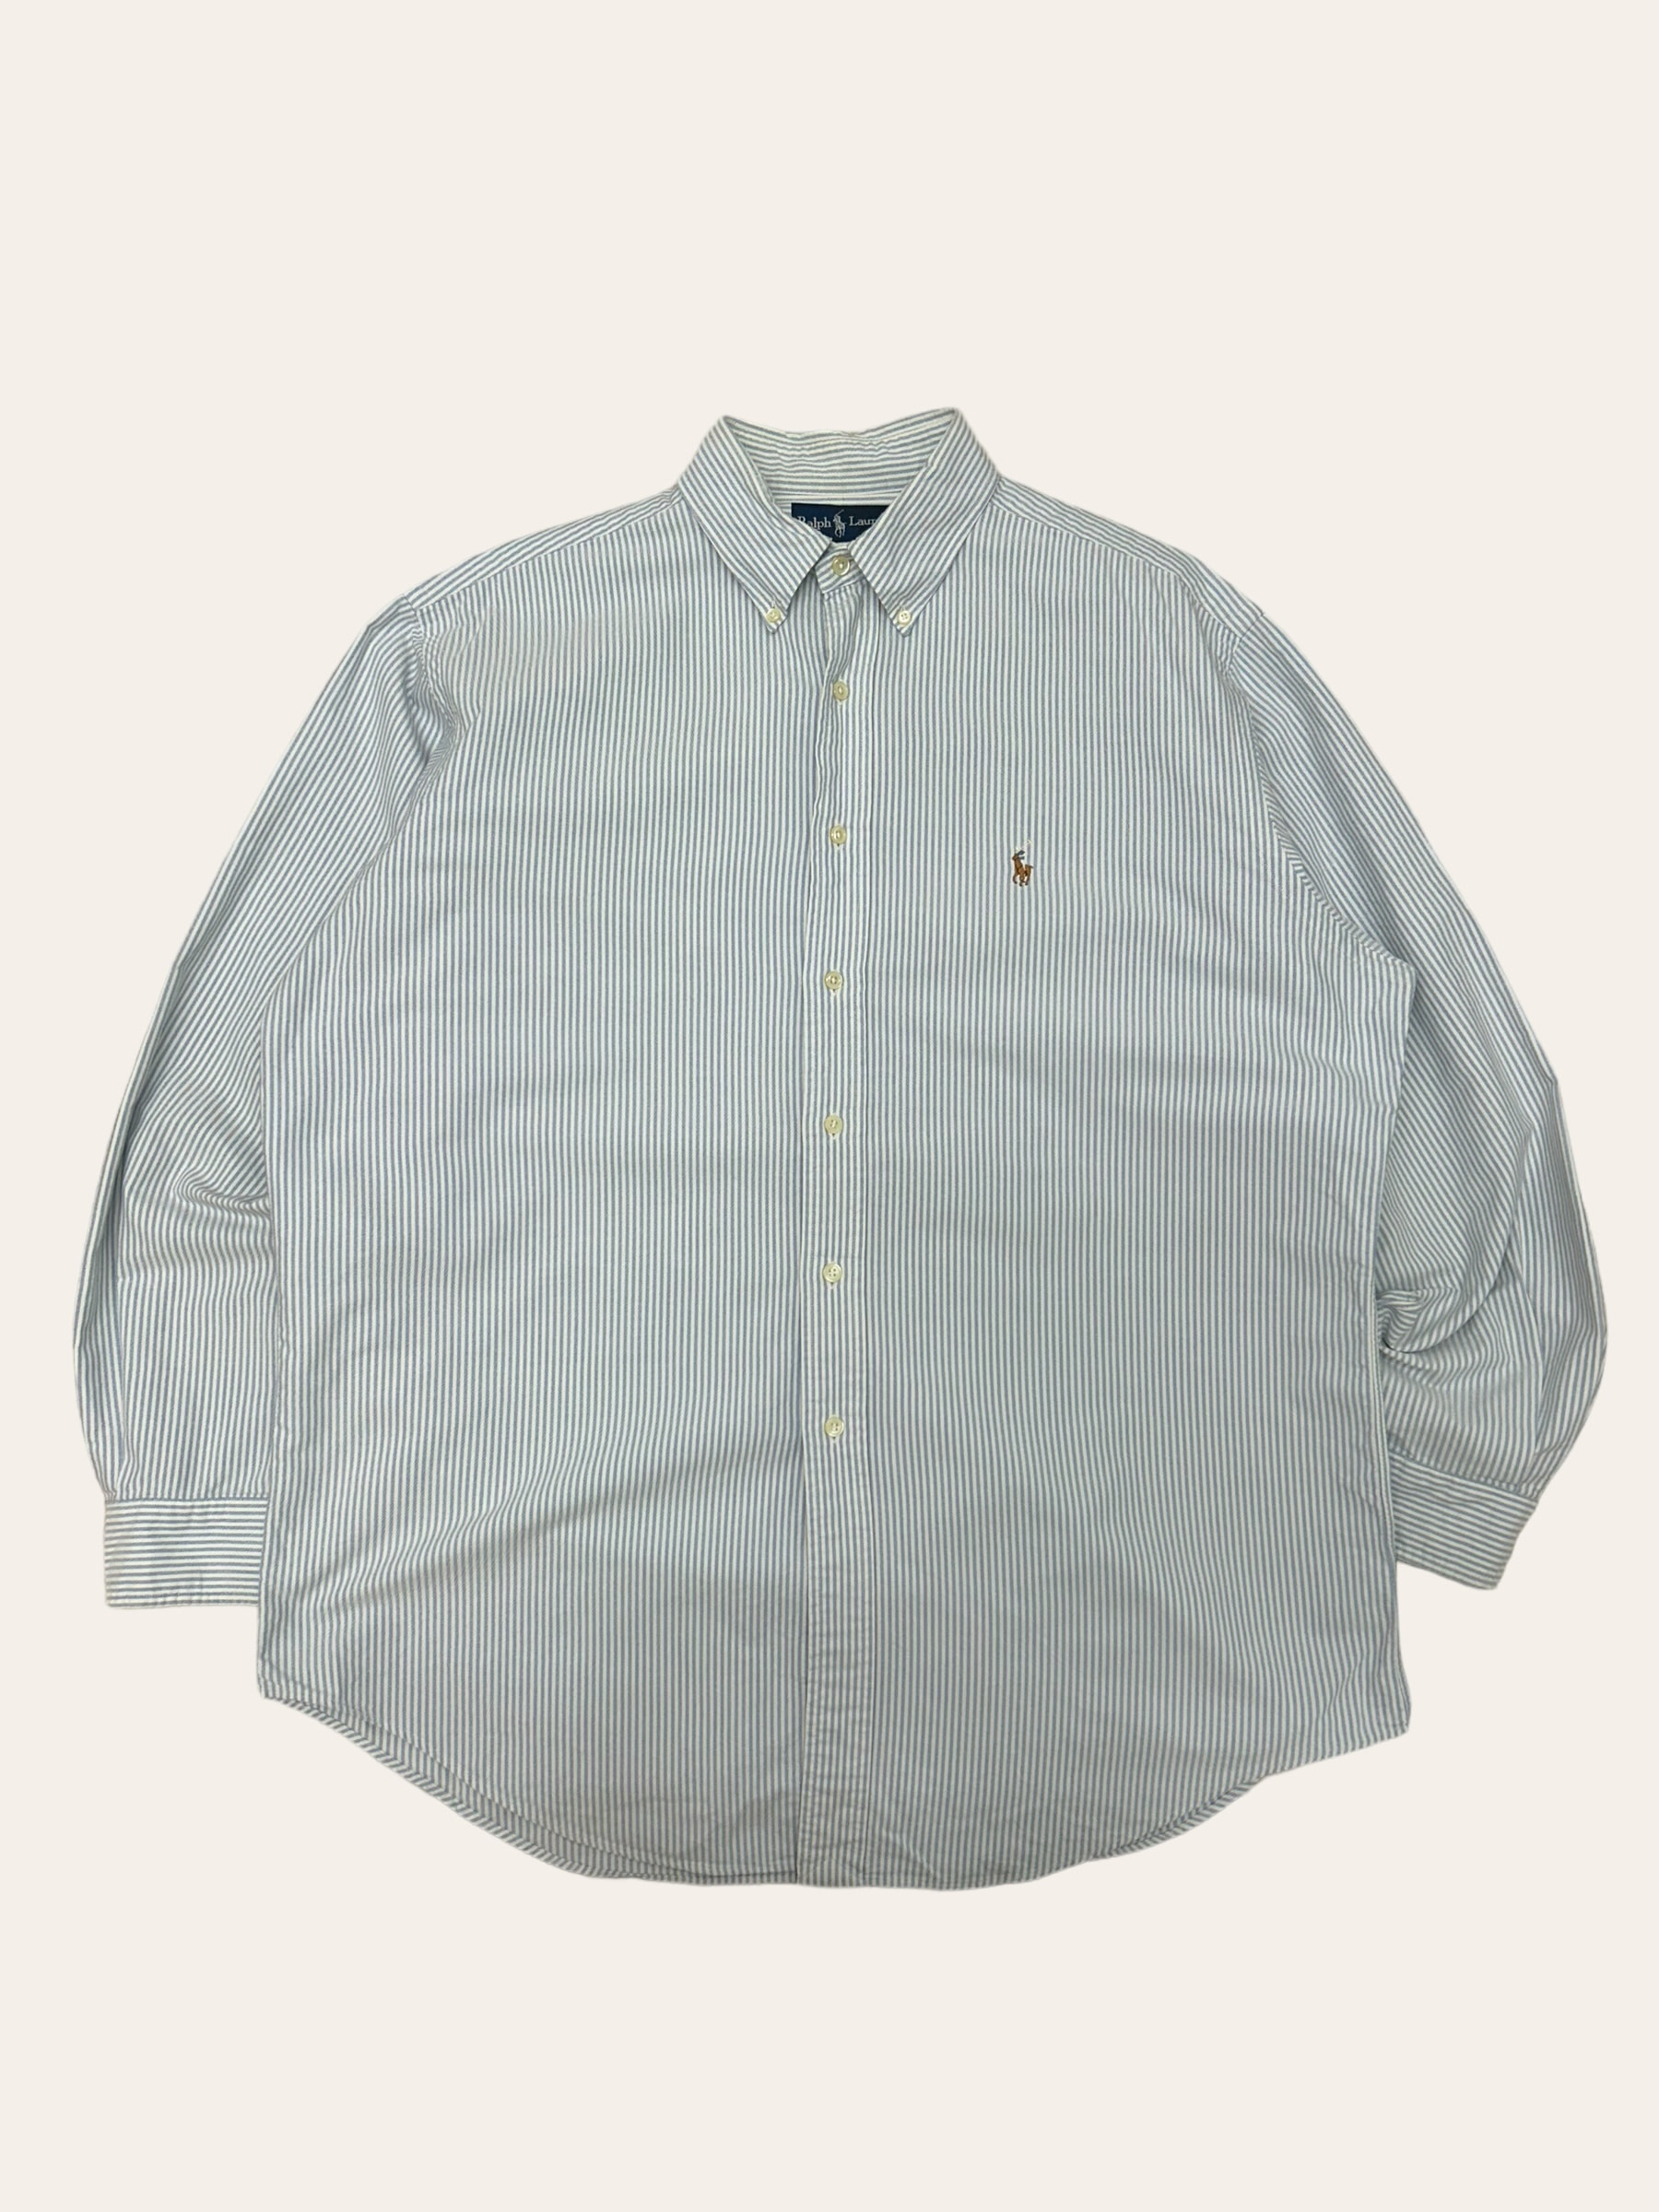 (From USA)Polo ralph lauren blue stripe oxford shirt 16.5